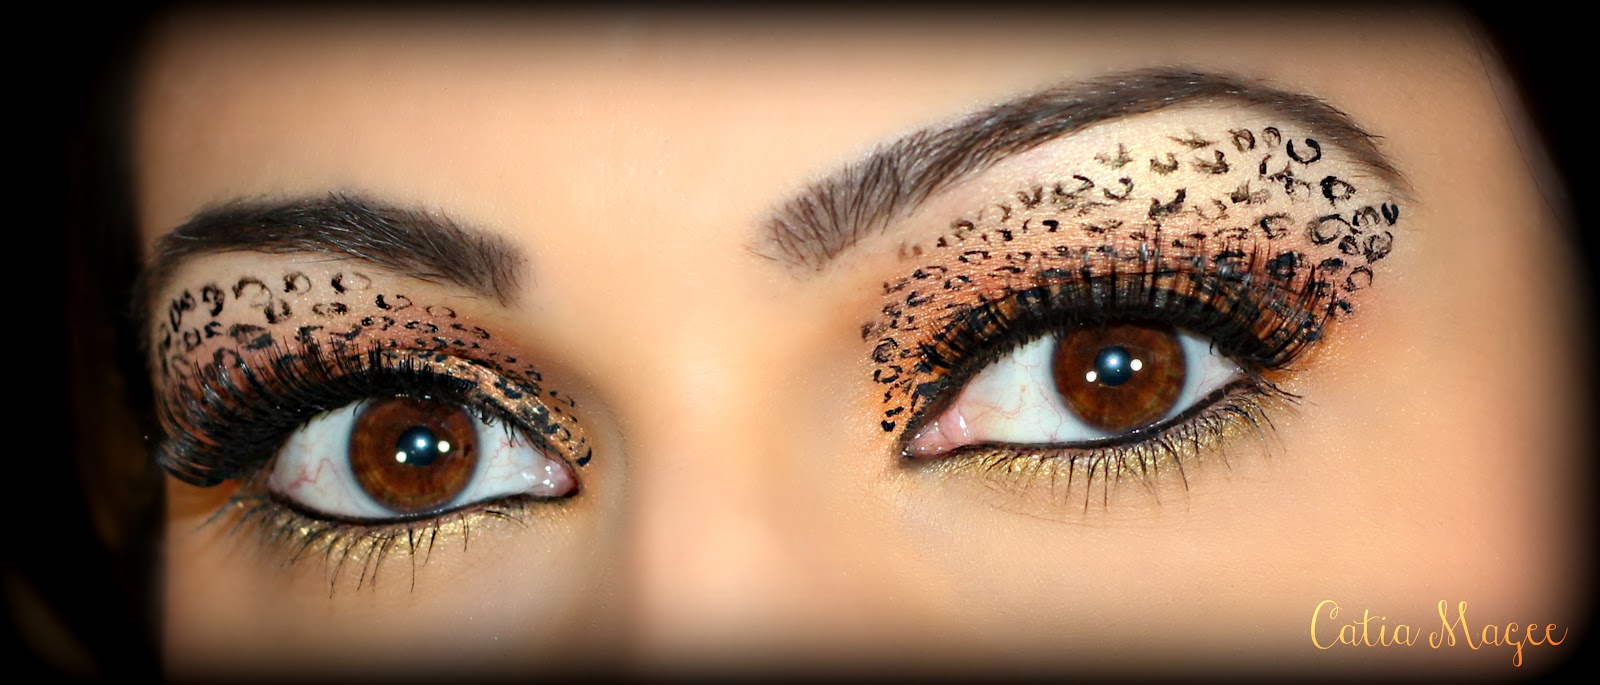 Cheetah eye makeup - photo# 49. 